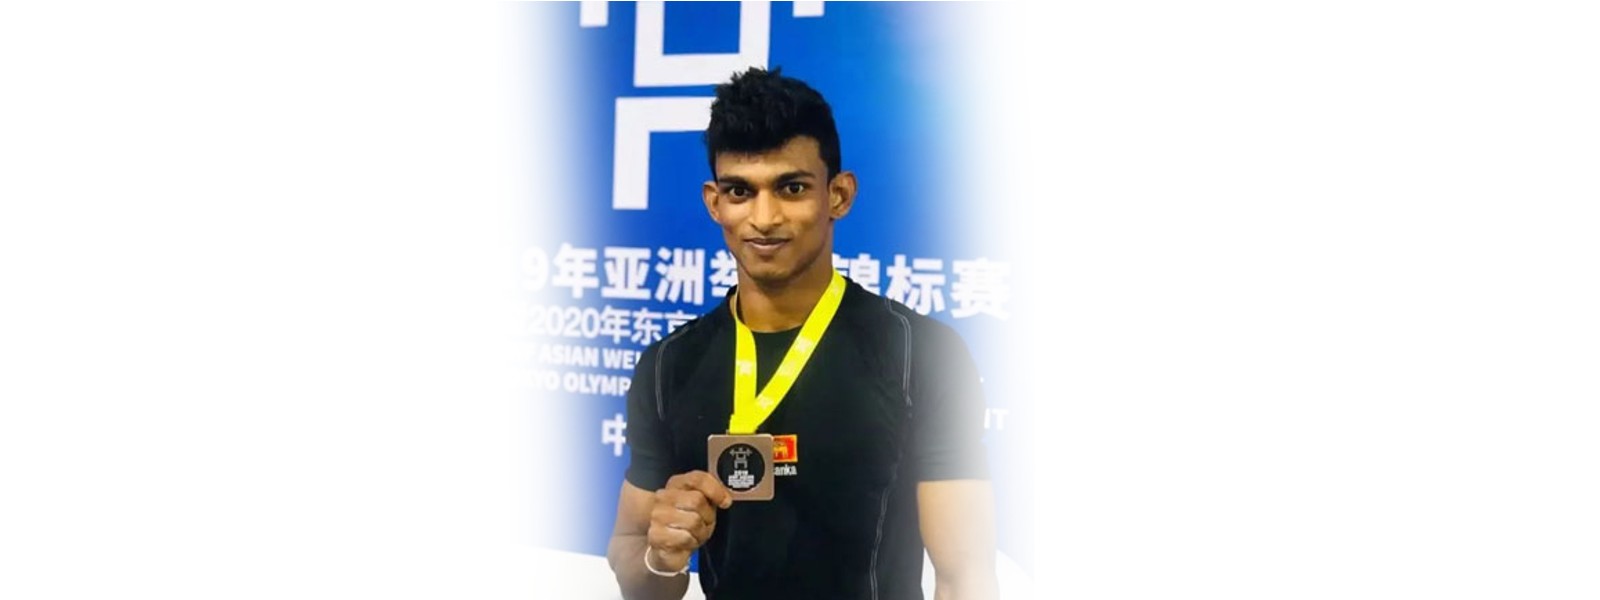 Sri Lanka wins first medal at CWG2022